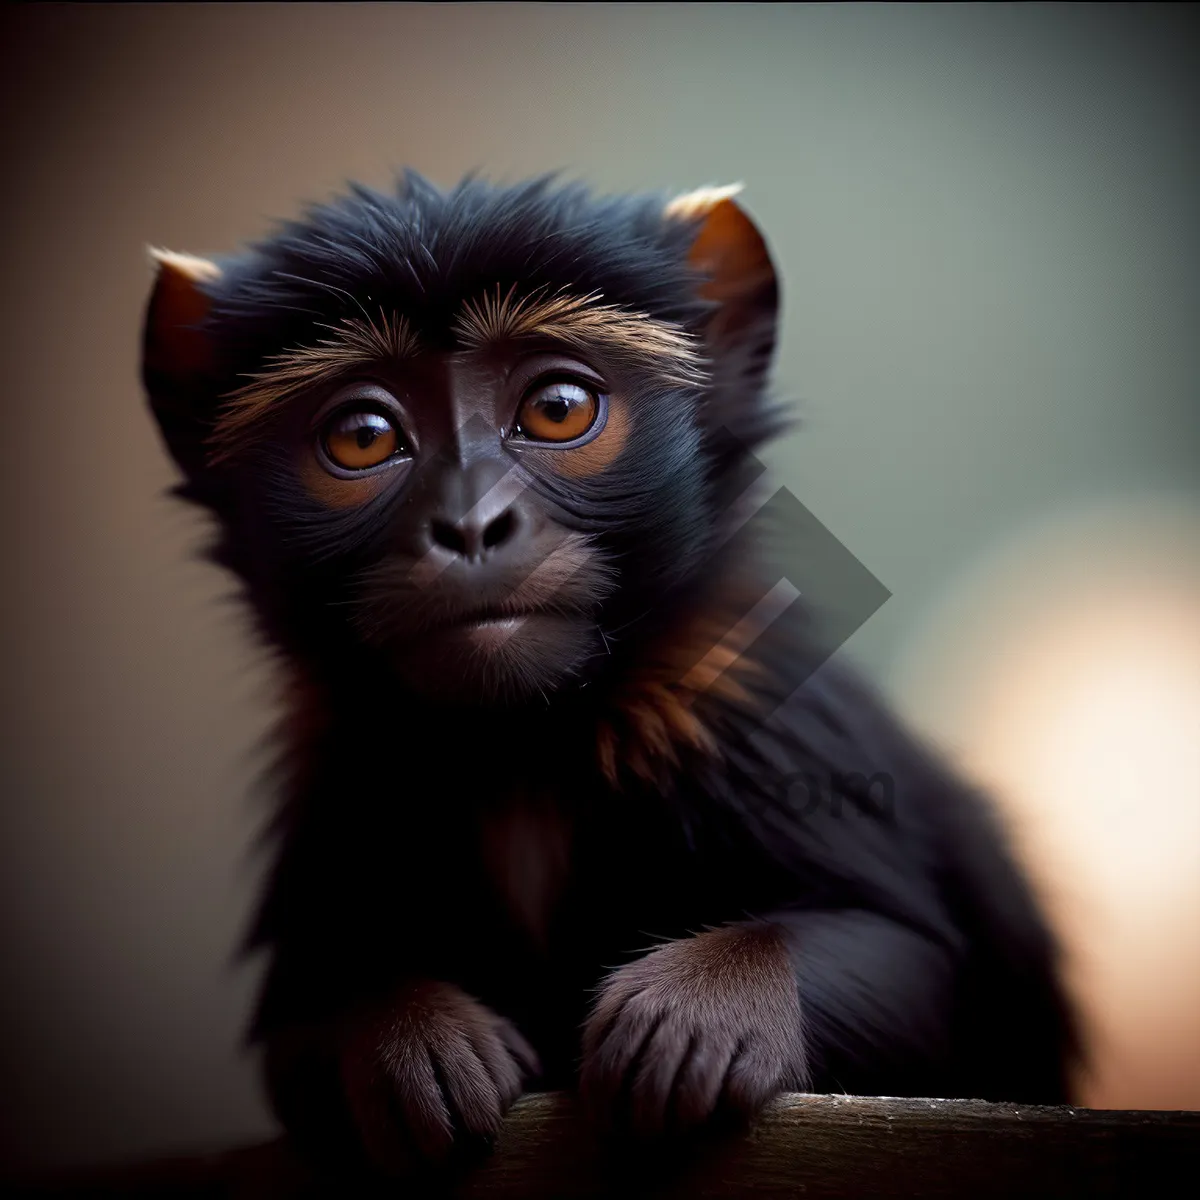 Picture of Cute Orangutan Kitten with Big Eyes